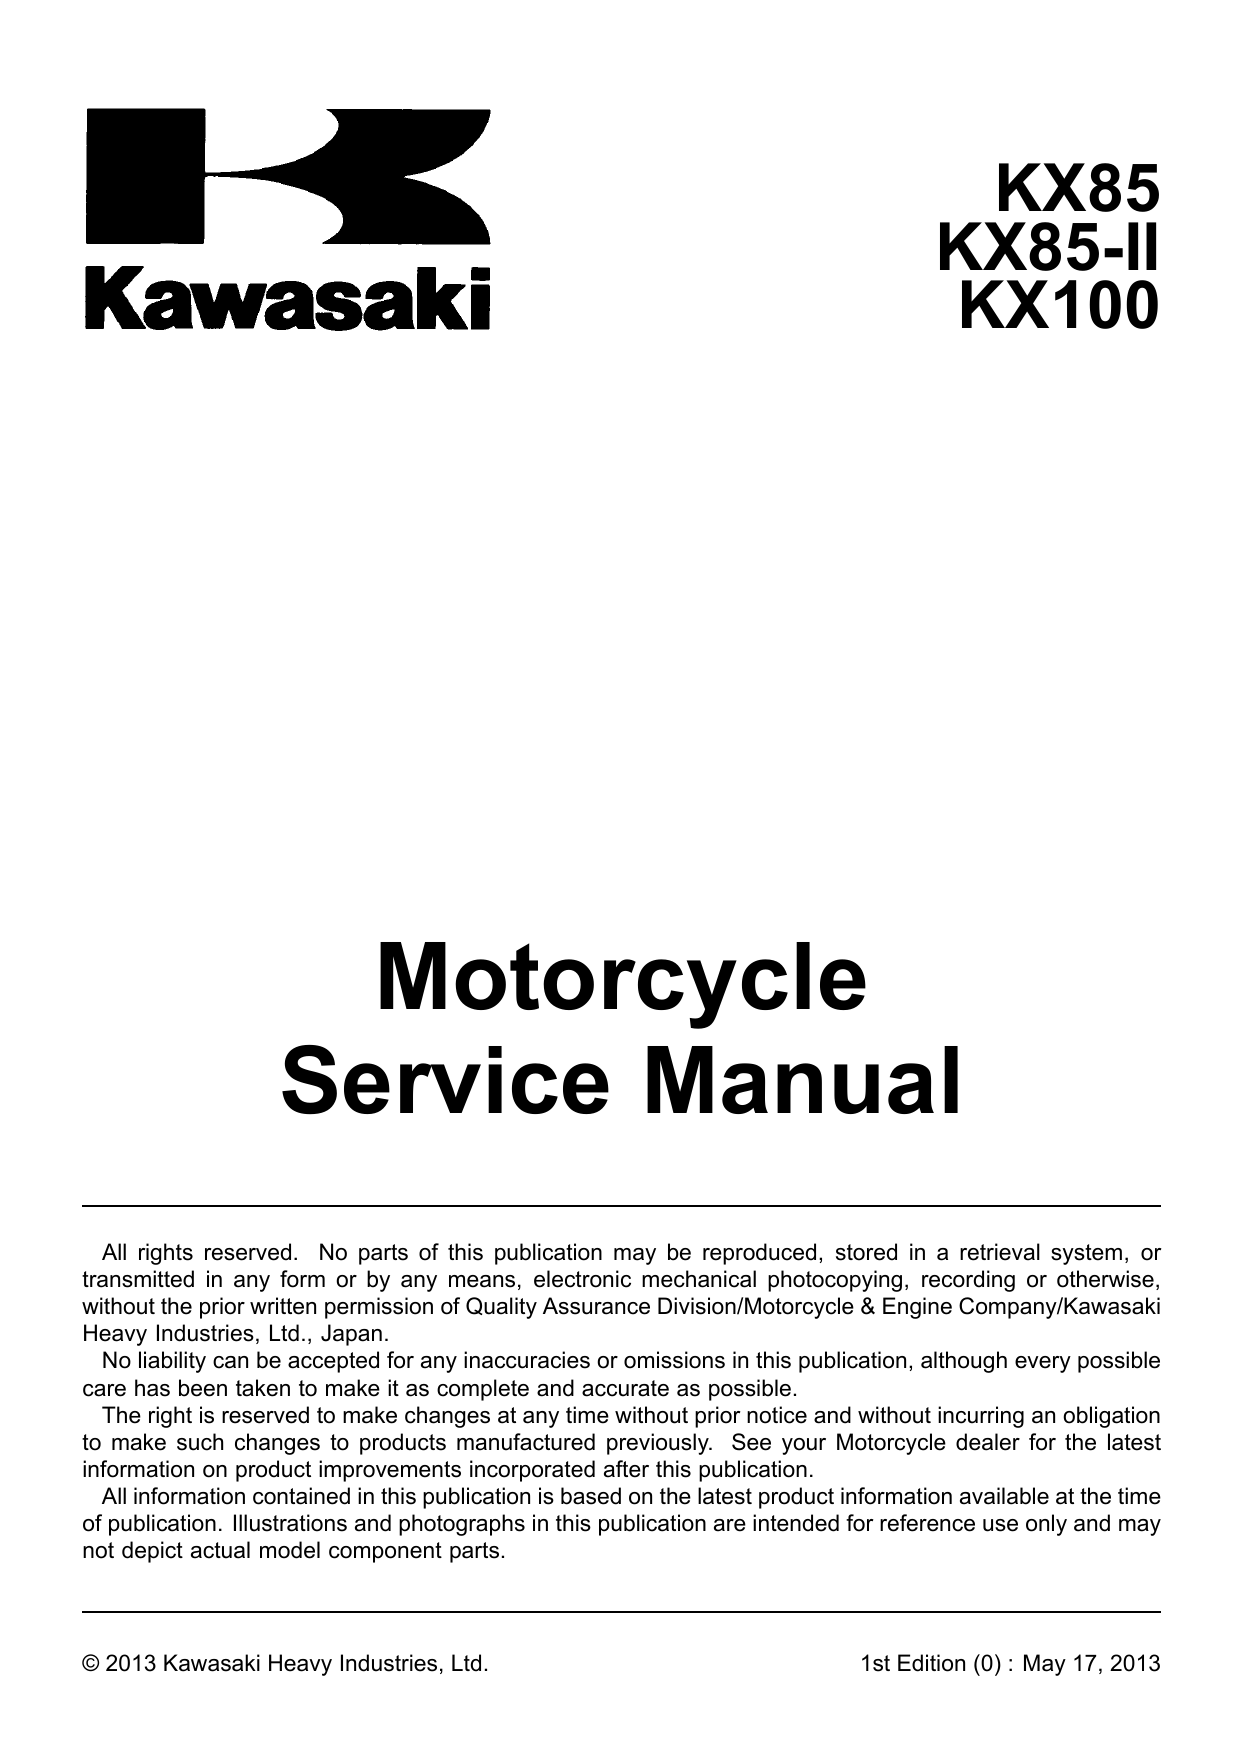 2014 Kawasaki KX 85, KX 85-II, KX 100, KX 85CE,  KX 85DE, KX 110FE repair manual Preview image 5